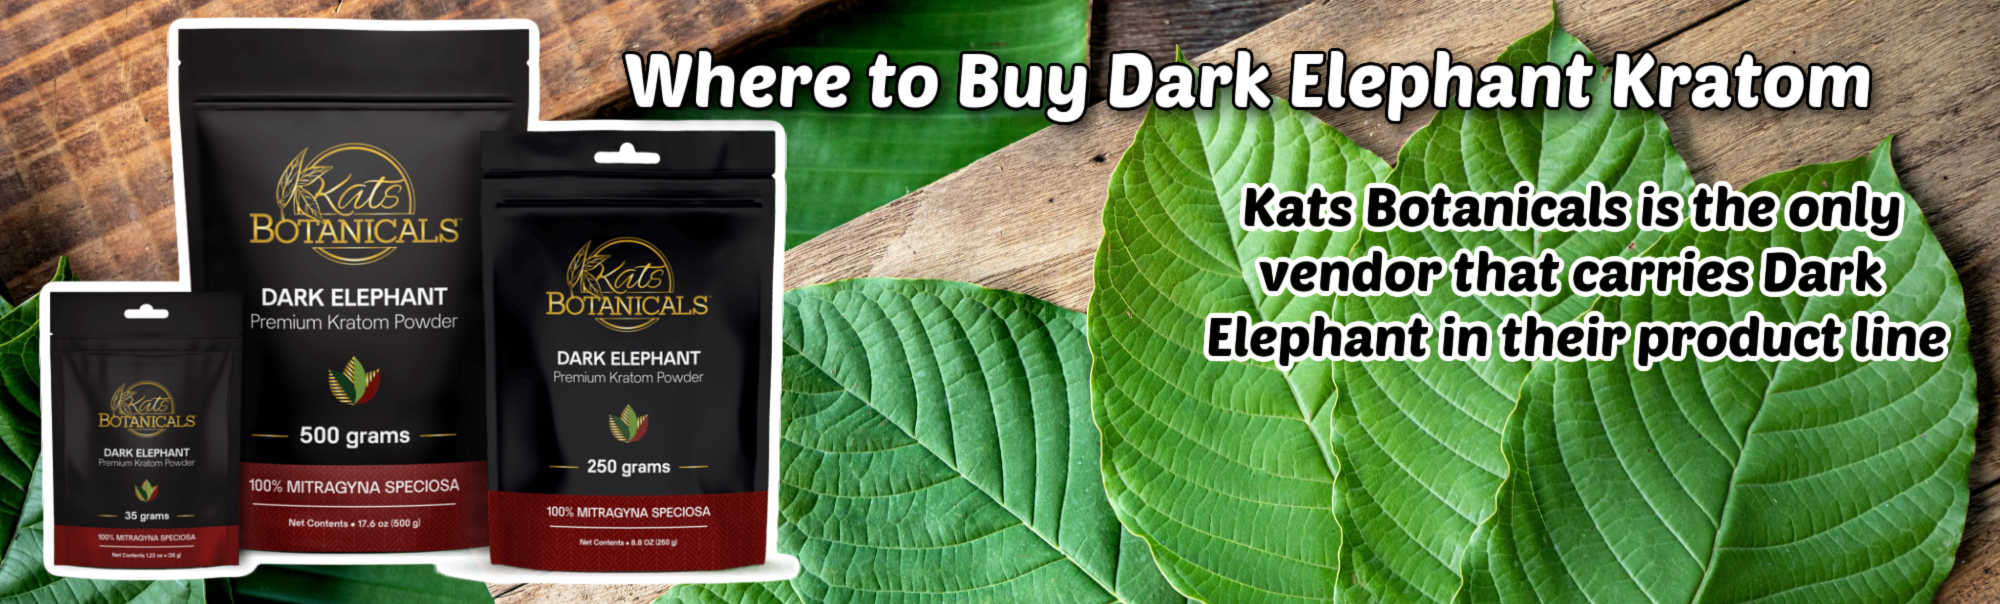 image of where to buy dark elephant kratom